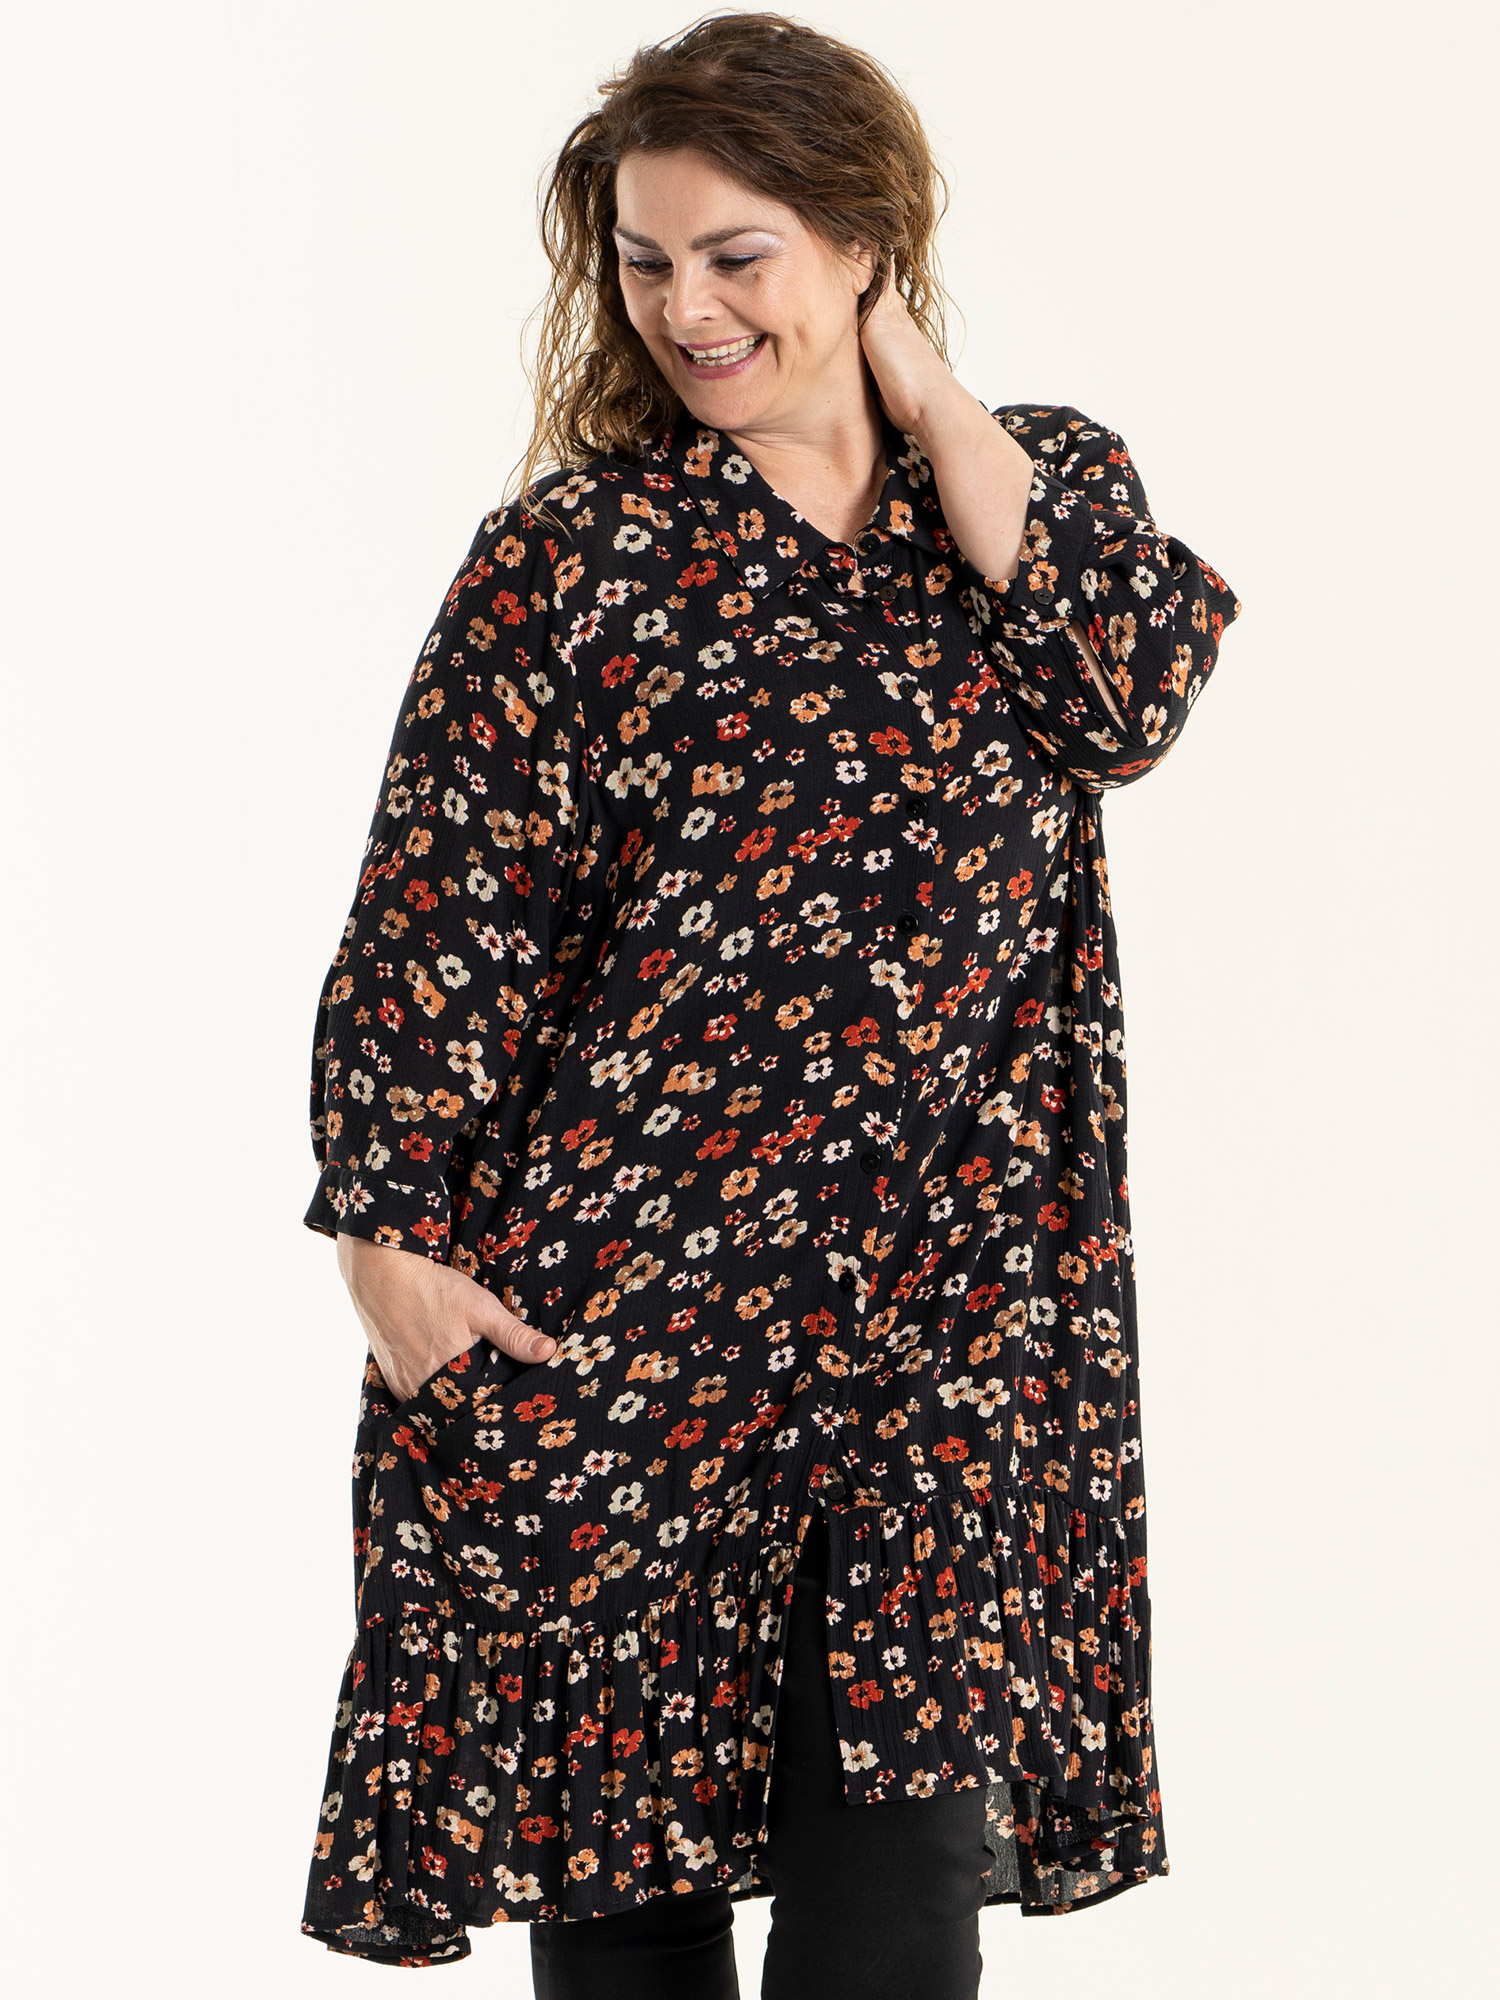 EDITH - Sort skjorte tunika i crepet viskose med blomster print fra Gozzip